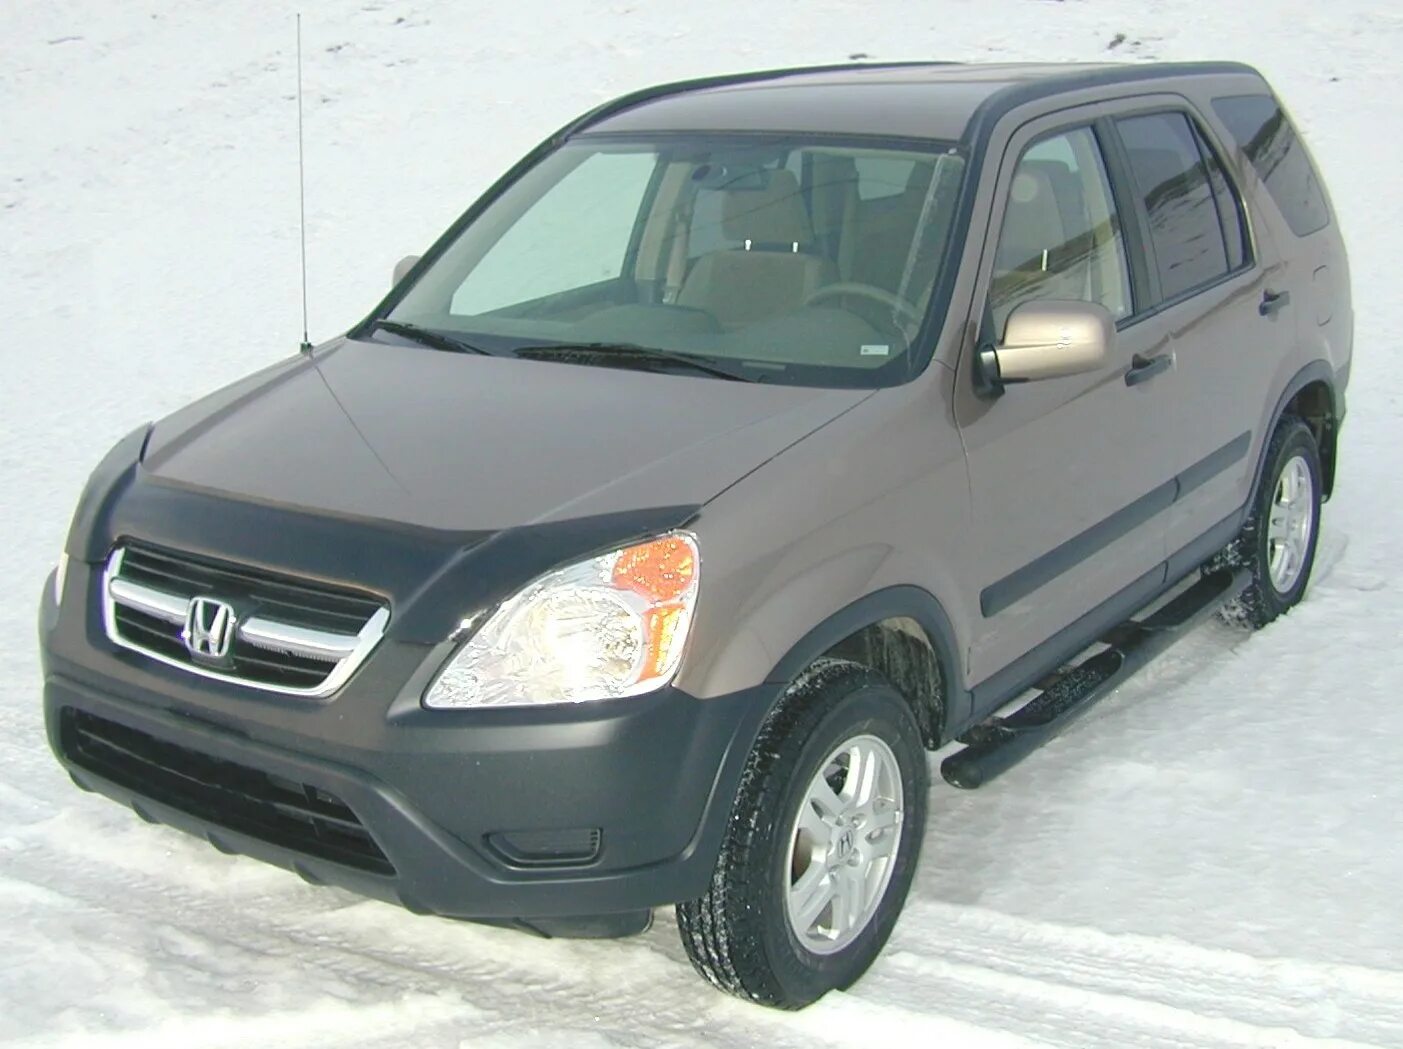 Honda crv 2006